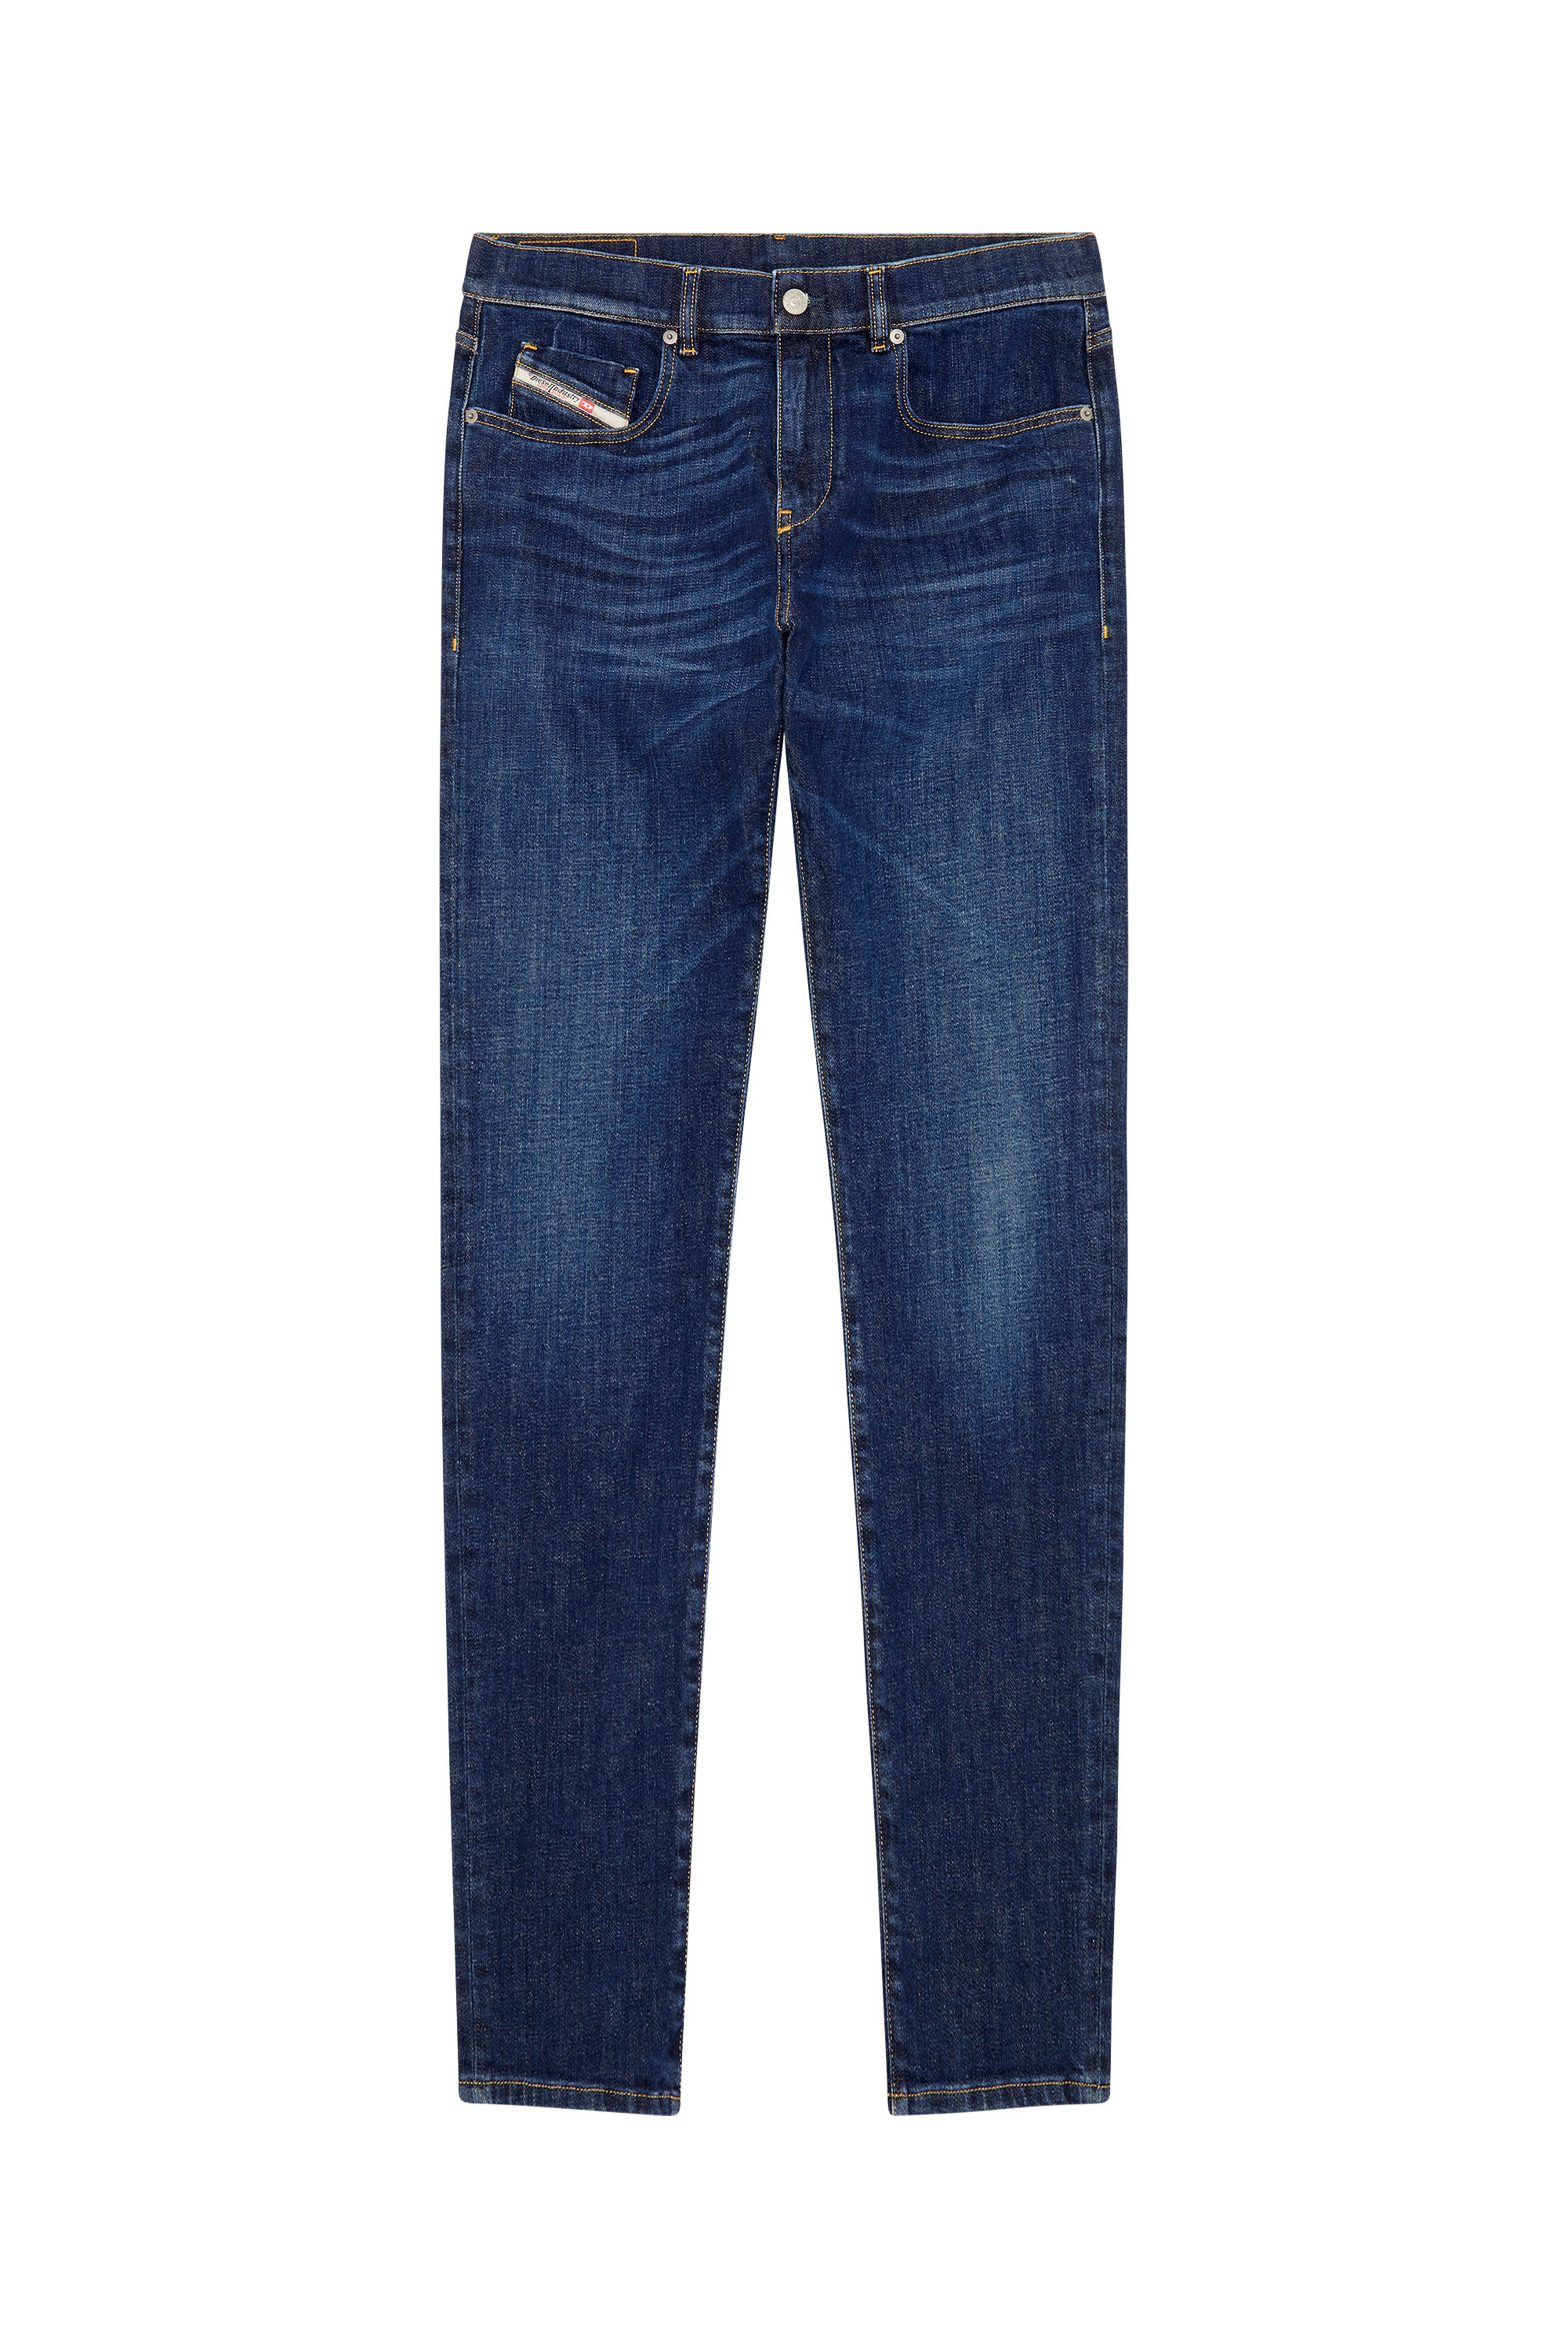 Slim Jeans 2019 D-Strukt 09B90, Dunkelblau - Jeans